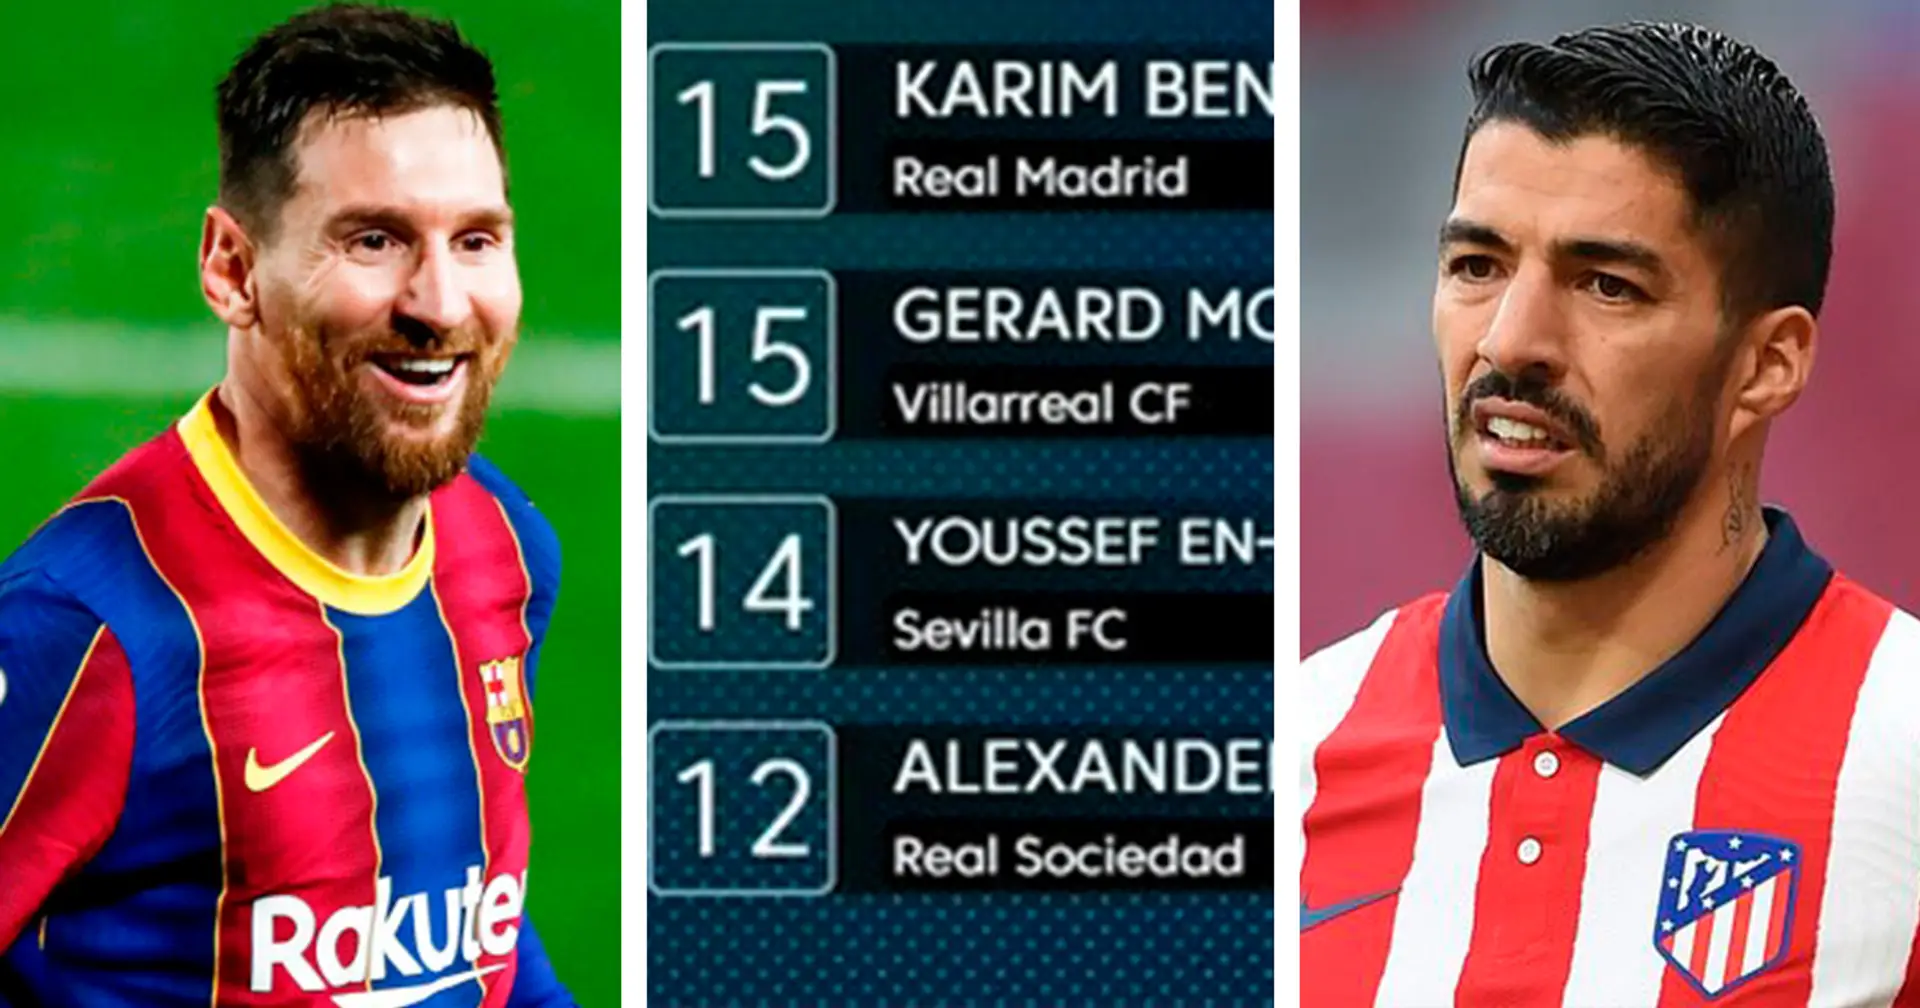 3 goals ahead of Suarez: Where Leo Messi stands on La Liga's top scorer and top assist-maker lists